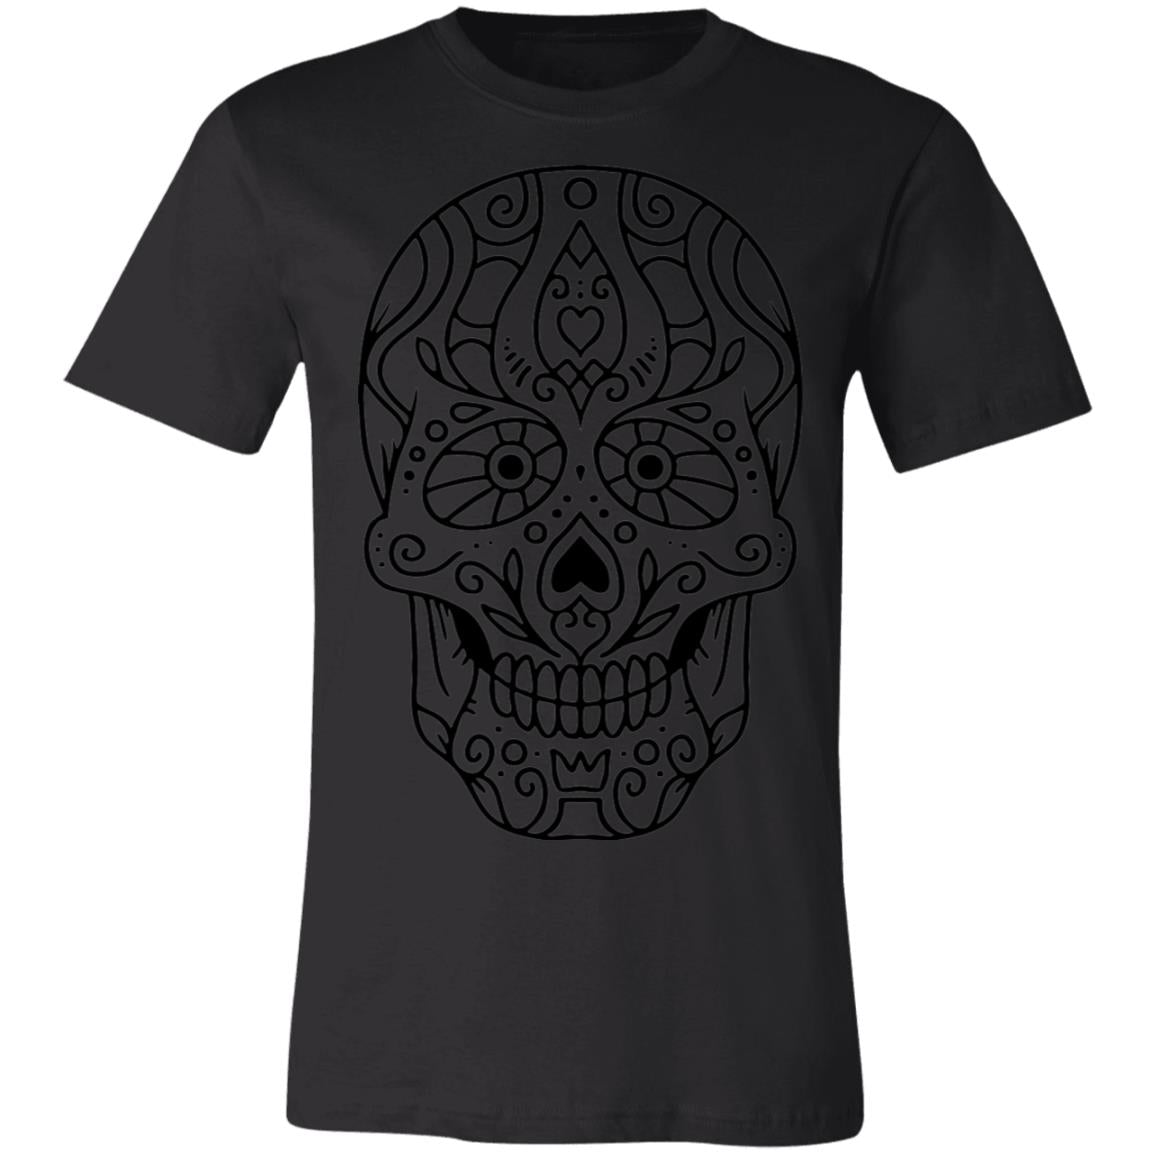 Skull 9 Santa Muerte Shirt-Express Your Love Gifts